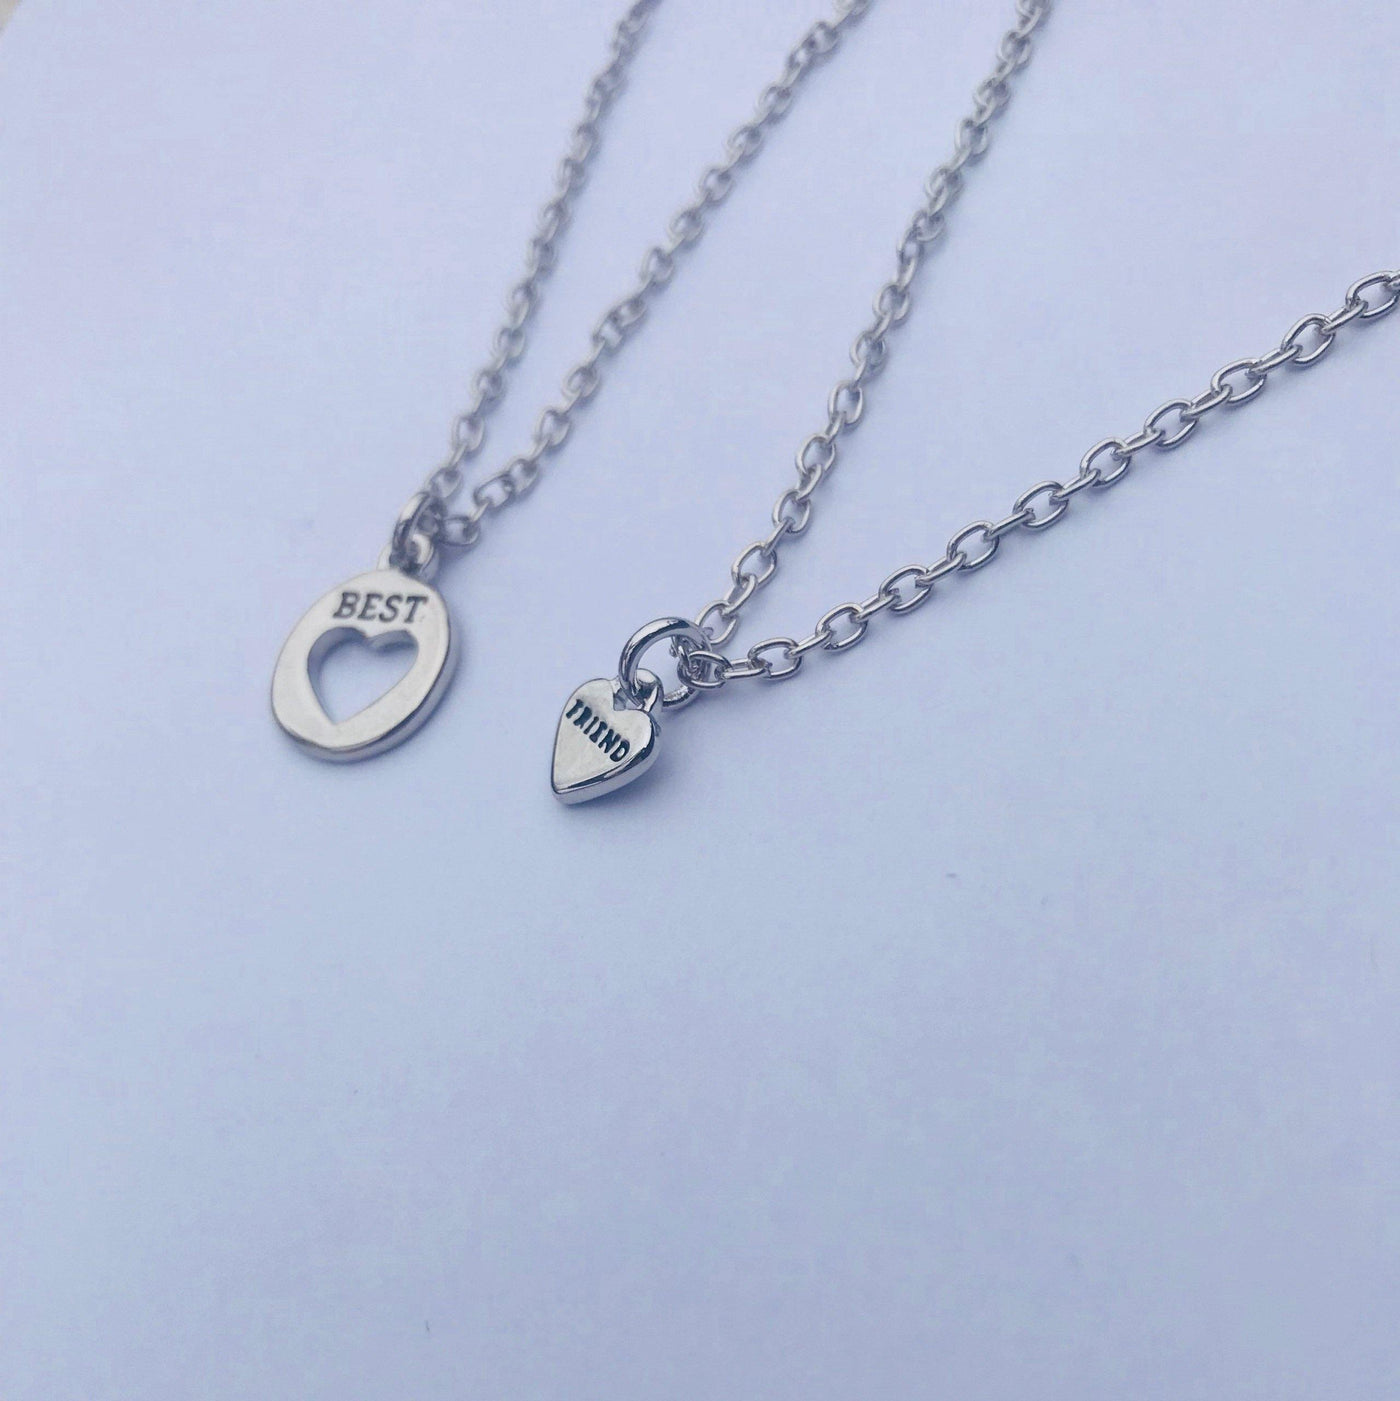 Best Friend Heart Necklace Set - 2 Necklaces - Accessories - dalia + jade 